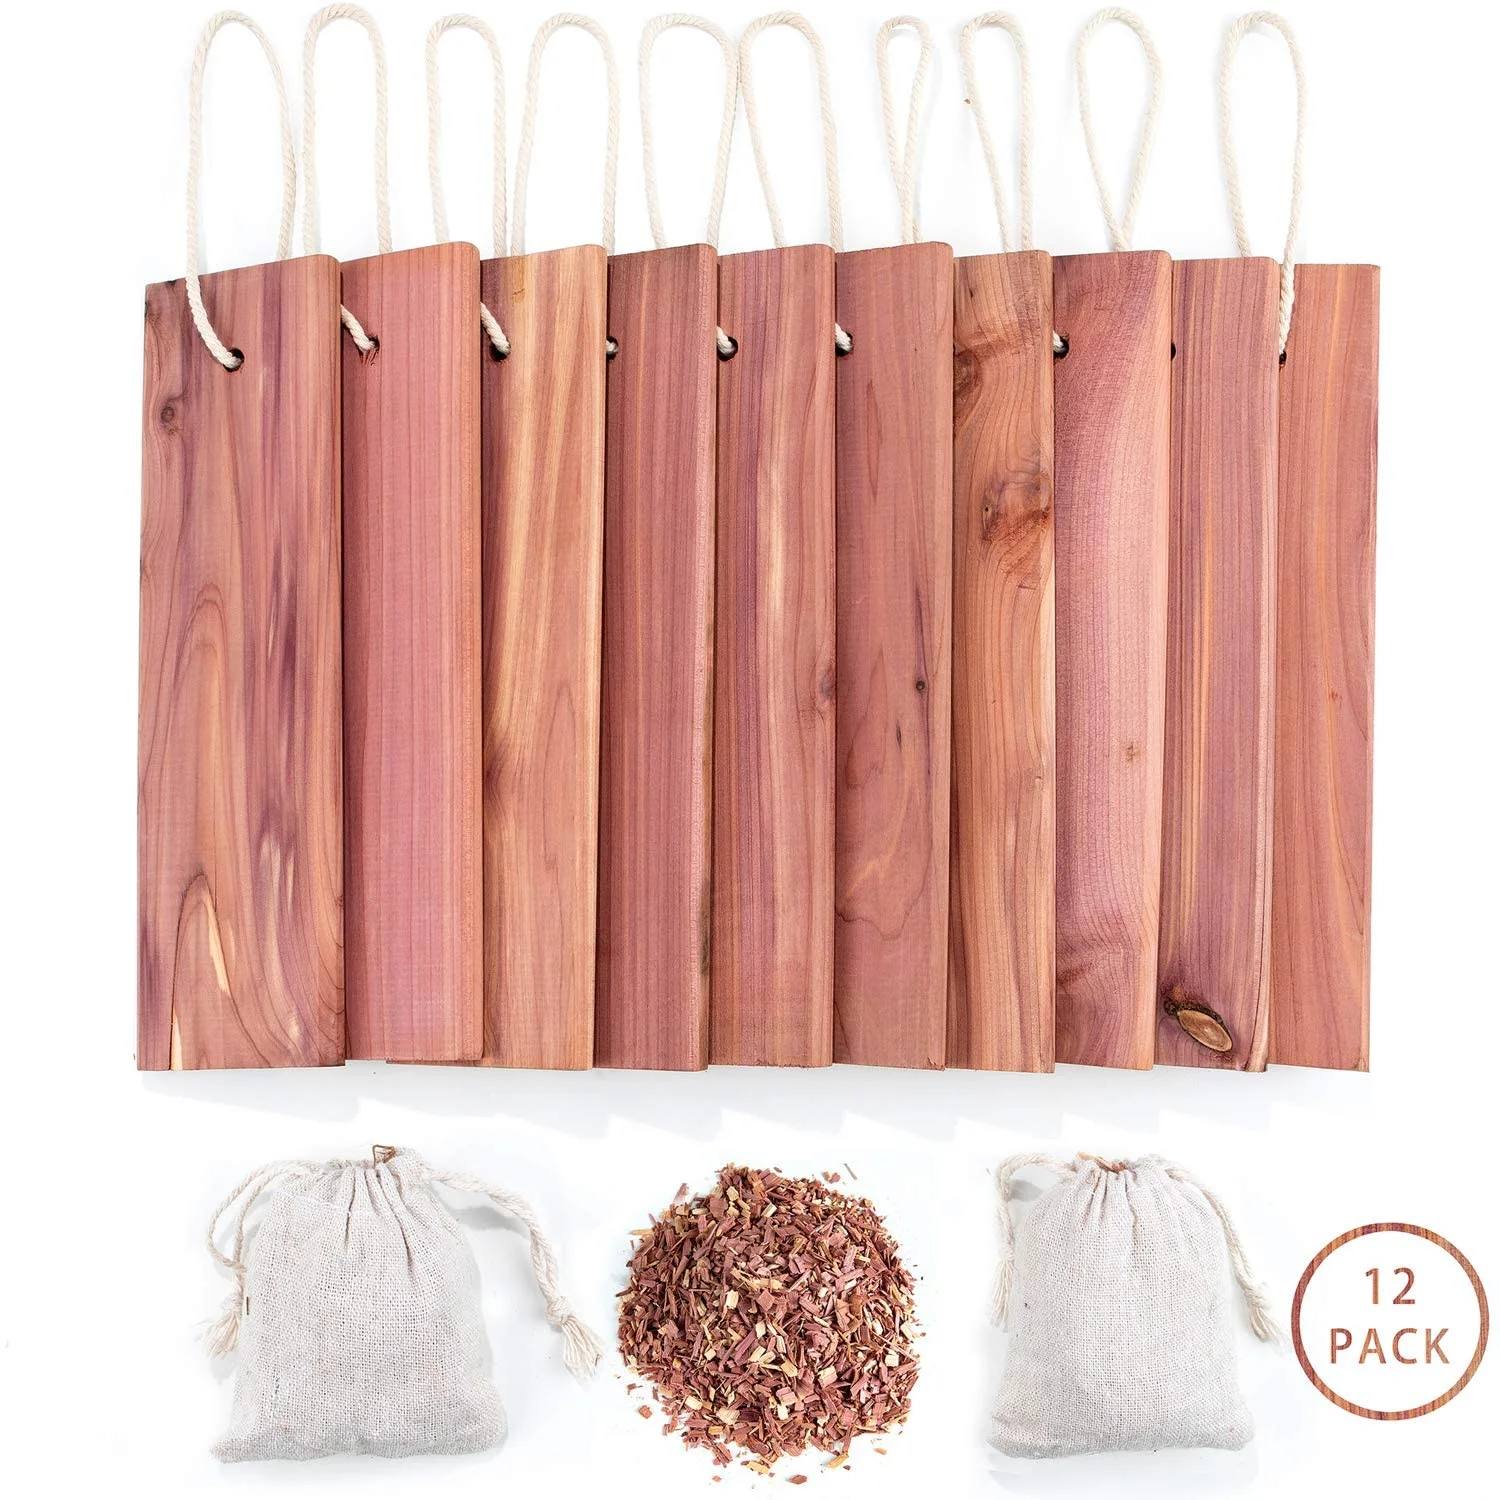 2020 factory sale red cedar block coats plank for clothes storage and cedar blocks cedar hangers for closet moth repellent (1600072500193)